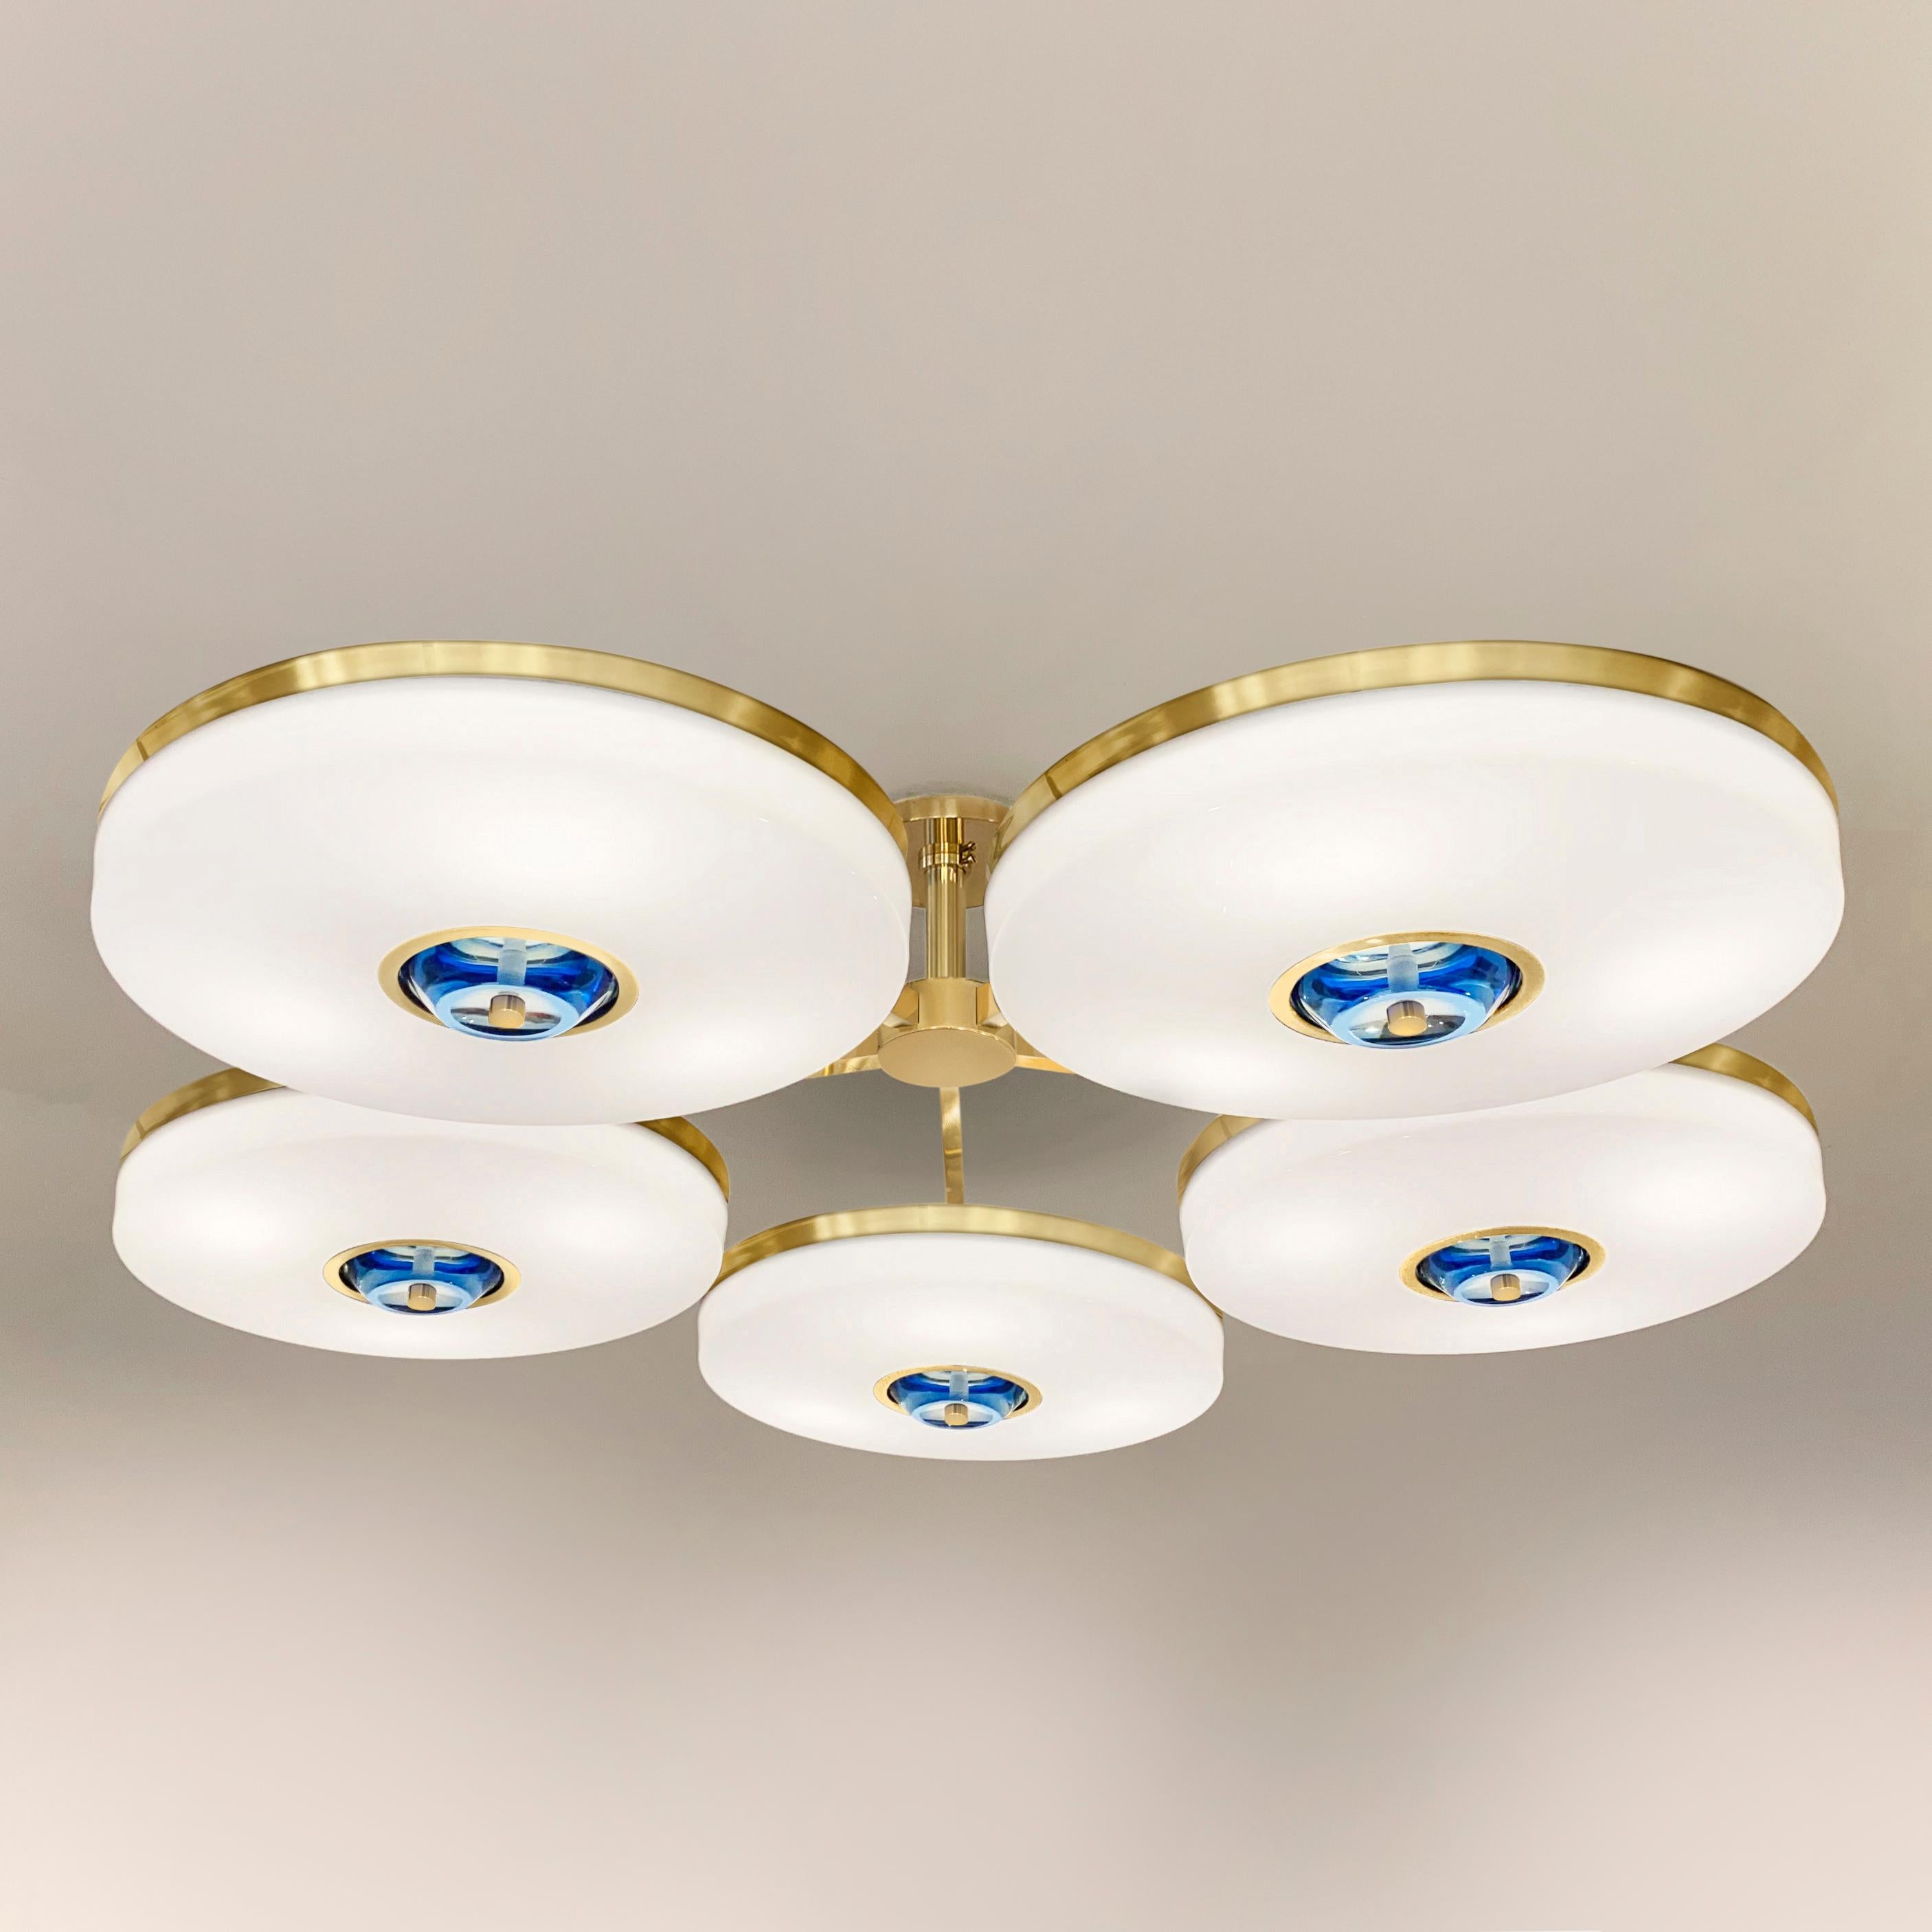 Italian Iris N. 5 Ceiling Light by Gaspare Asaro-Satin Nickel Finish For Sale